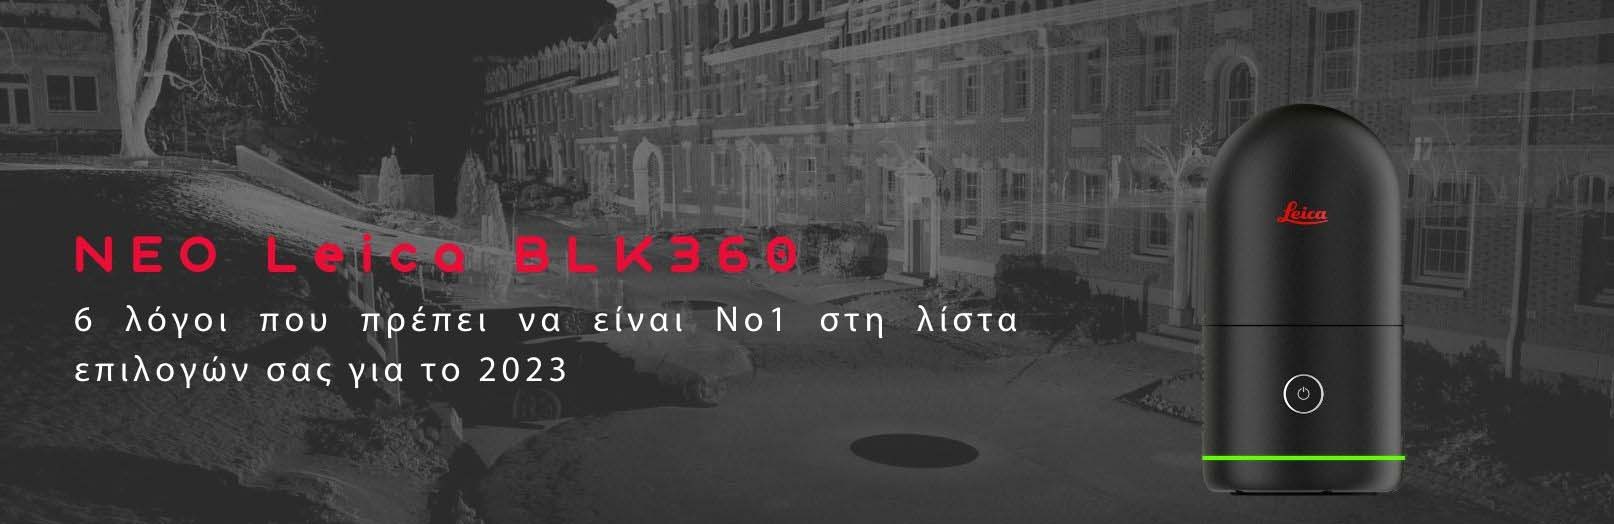 Leica BLK360 G2: 6 λόγοι που πρέπει να είναι Νο1 στη λίστα επιλογών σας ως το απόλυτο 3D Scanner για το 2023 